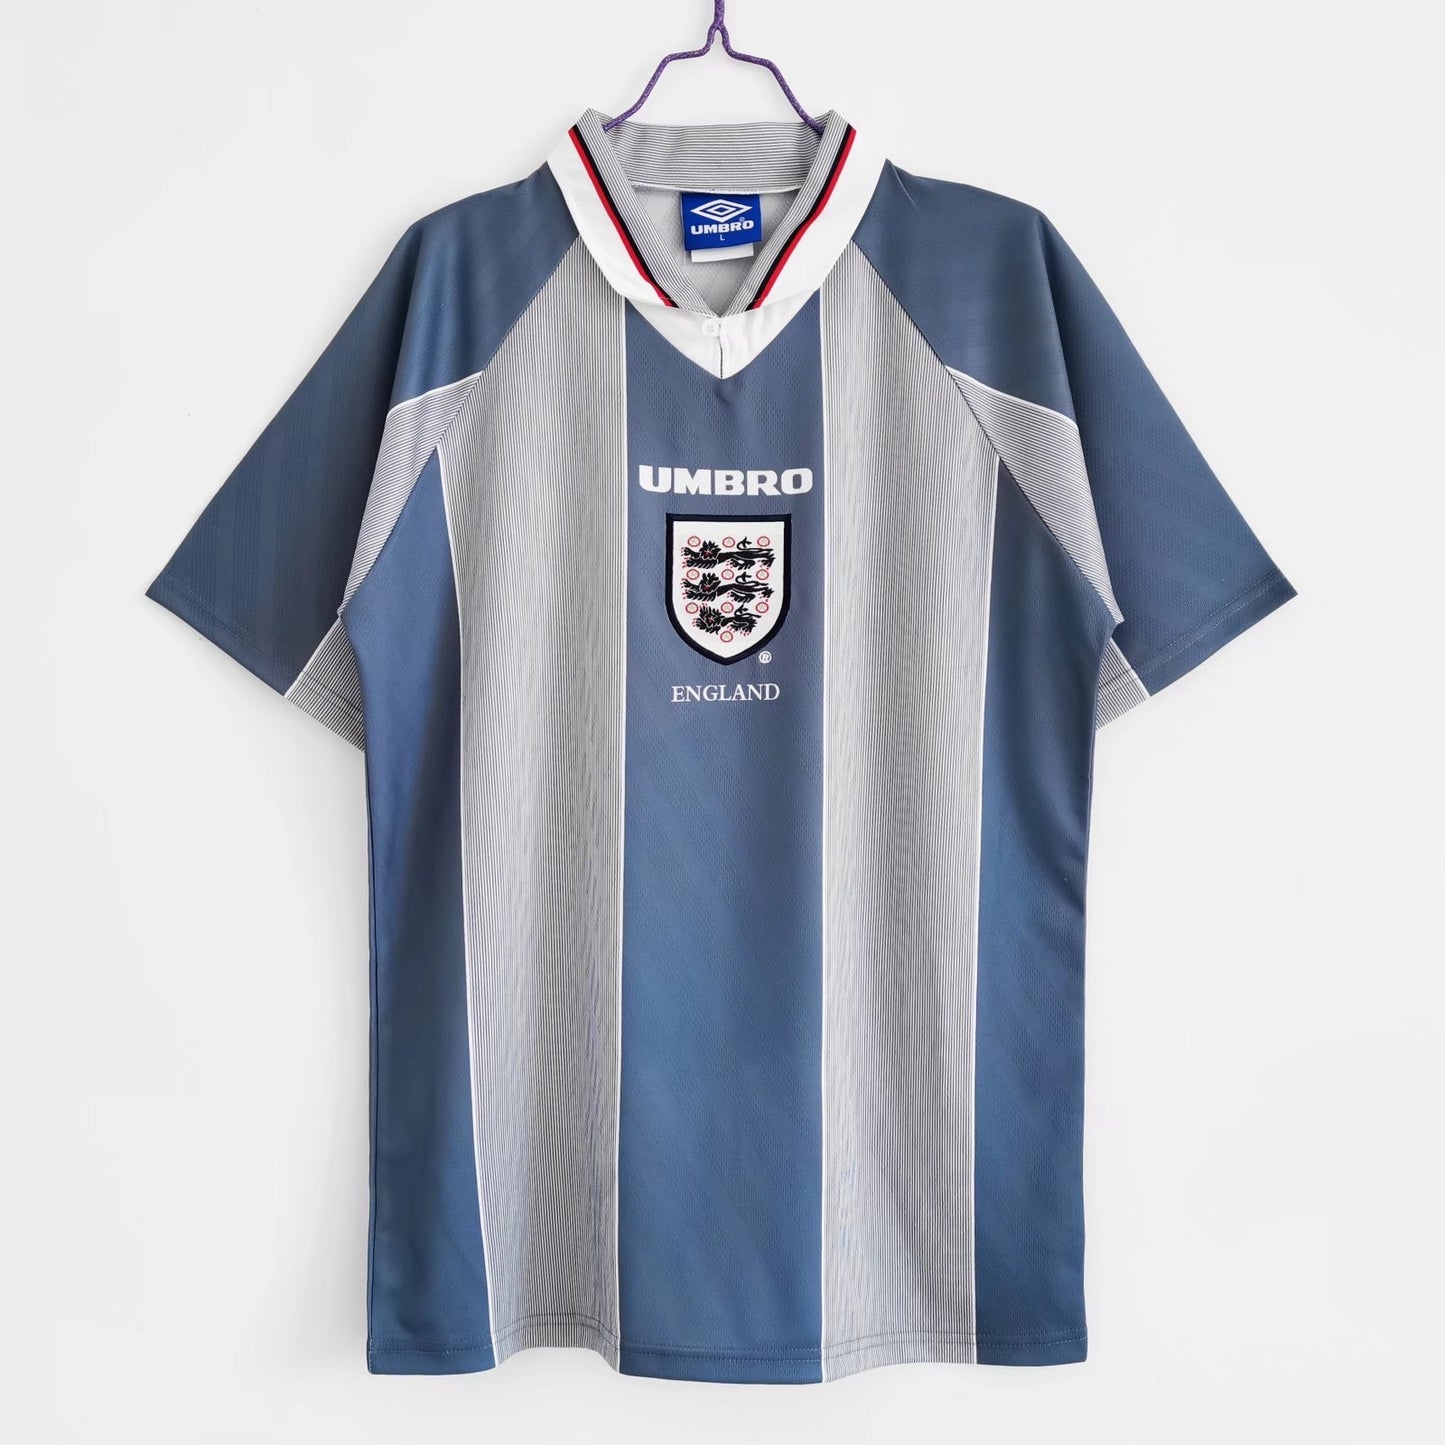 England vintage jersey 1996